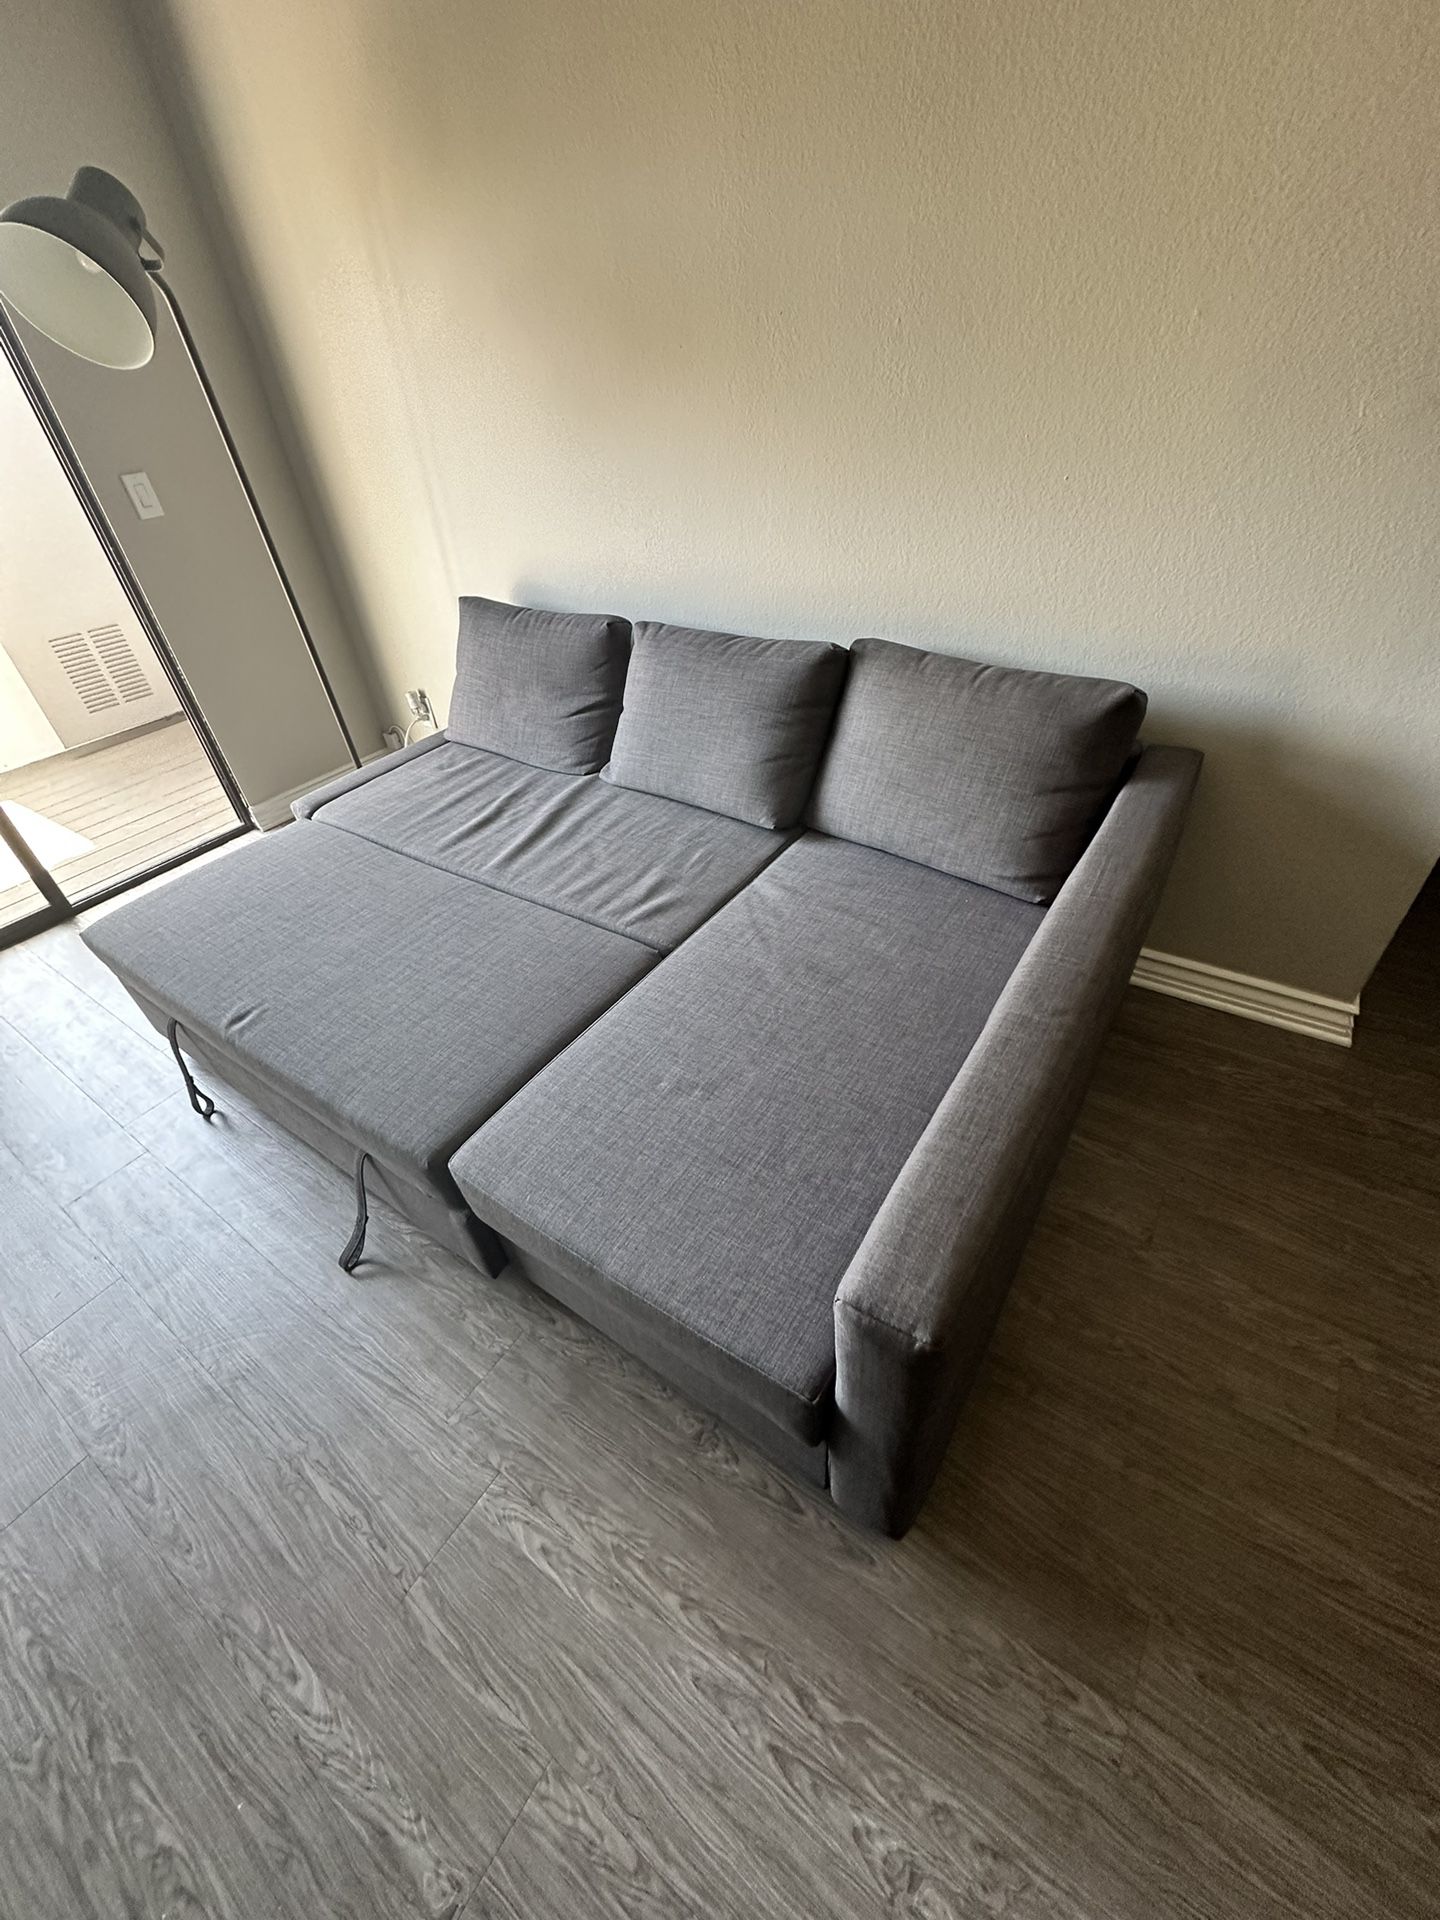 Convertable Sofa Bed